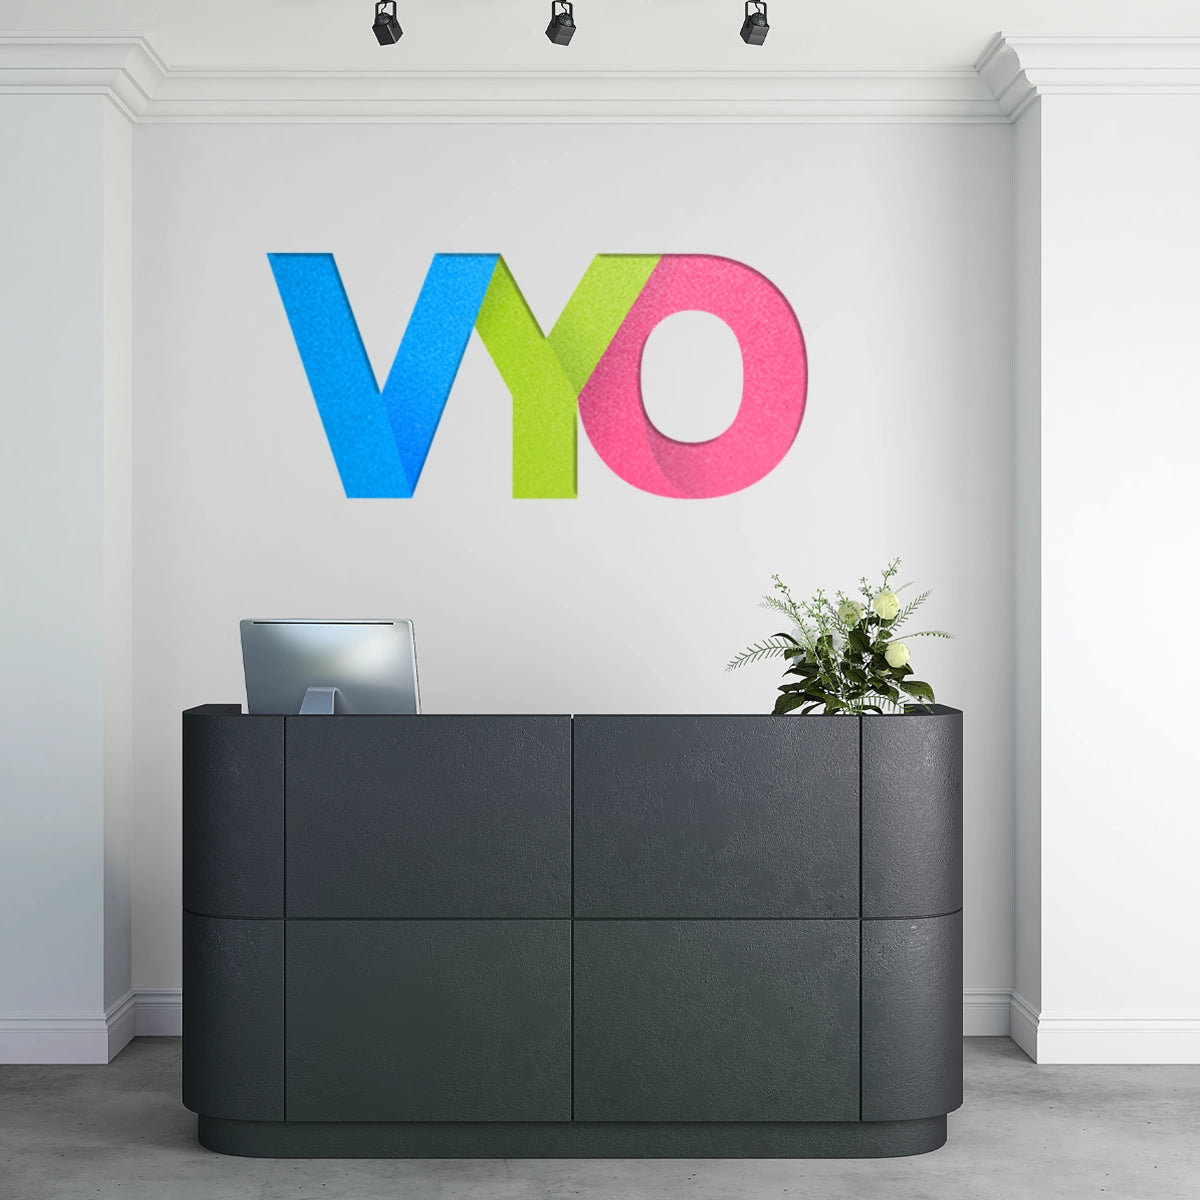 vyo.info